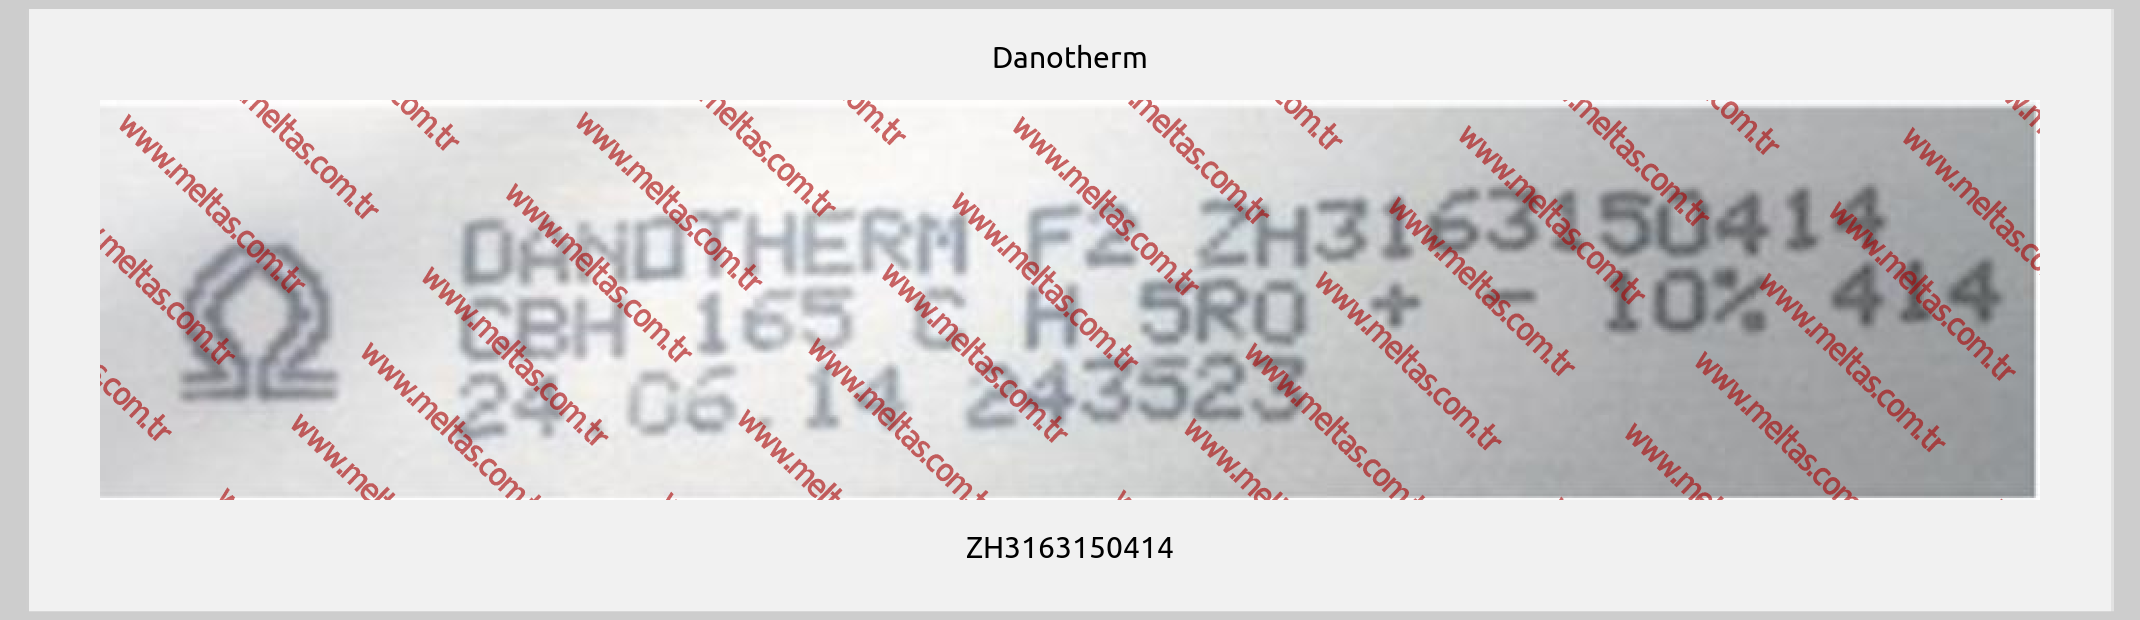 Danotherm - ZH3163150414